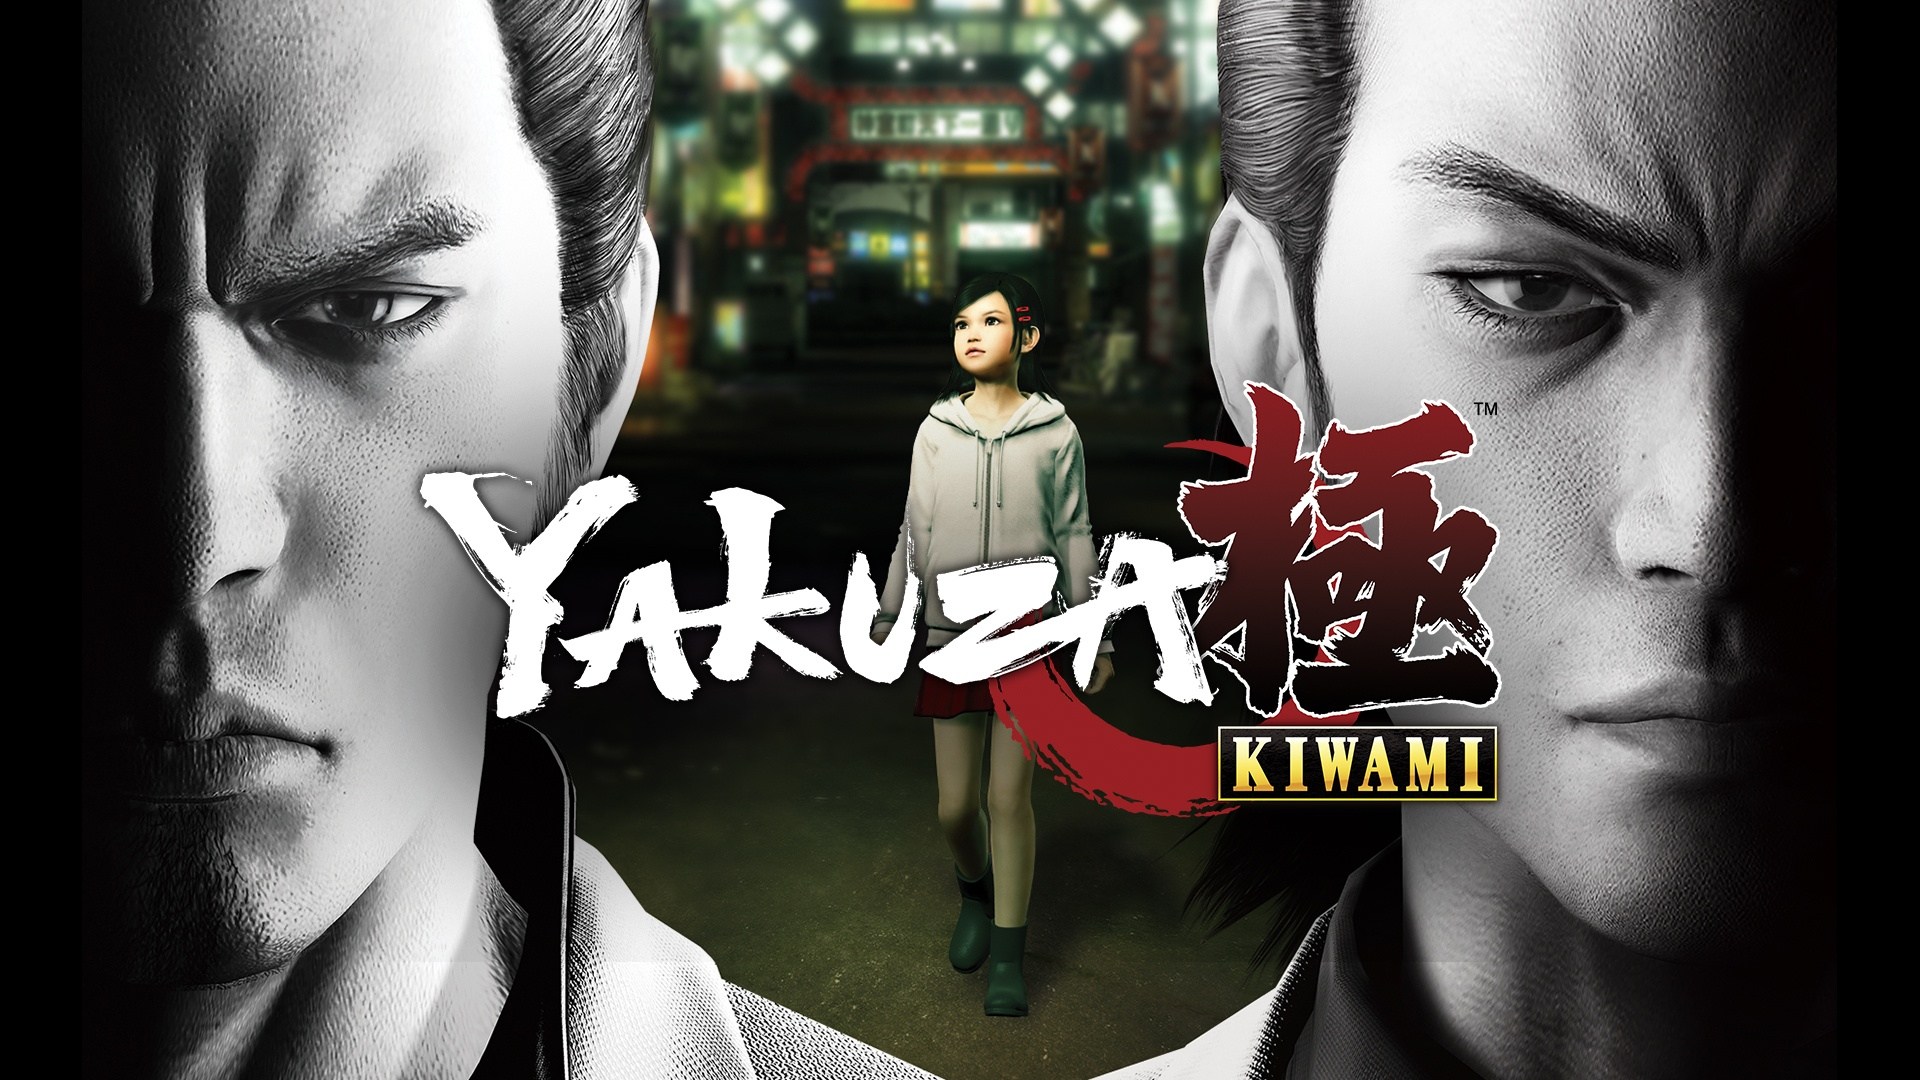 Jogos: Yakuza Kiwami está disponível para Xbox One e PC